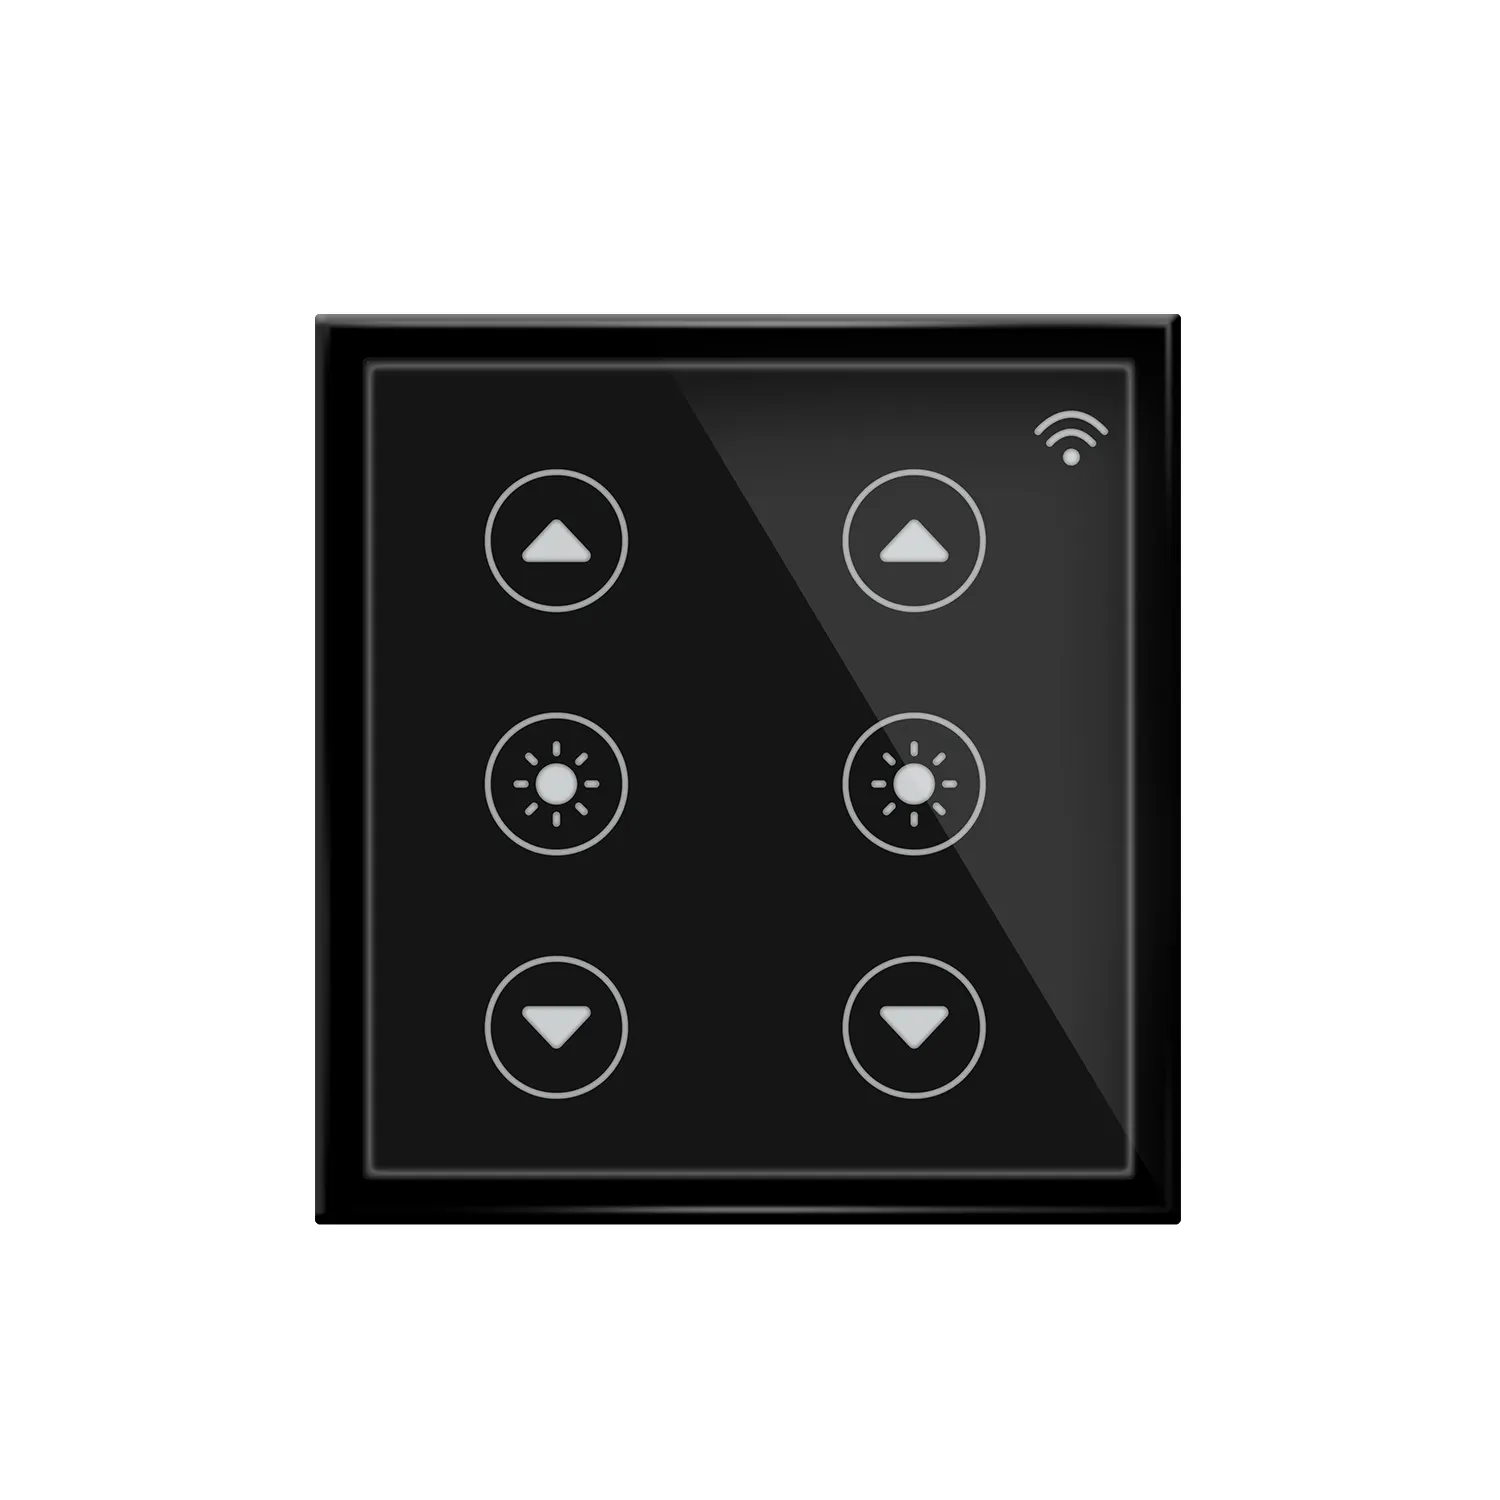 EVA LOGIK wifi smart light tuoch switch alexa tuya dimmer 2 gang modular switches india